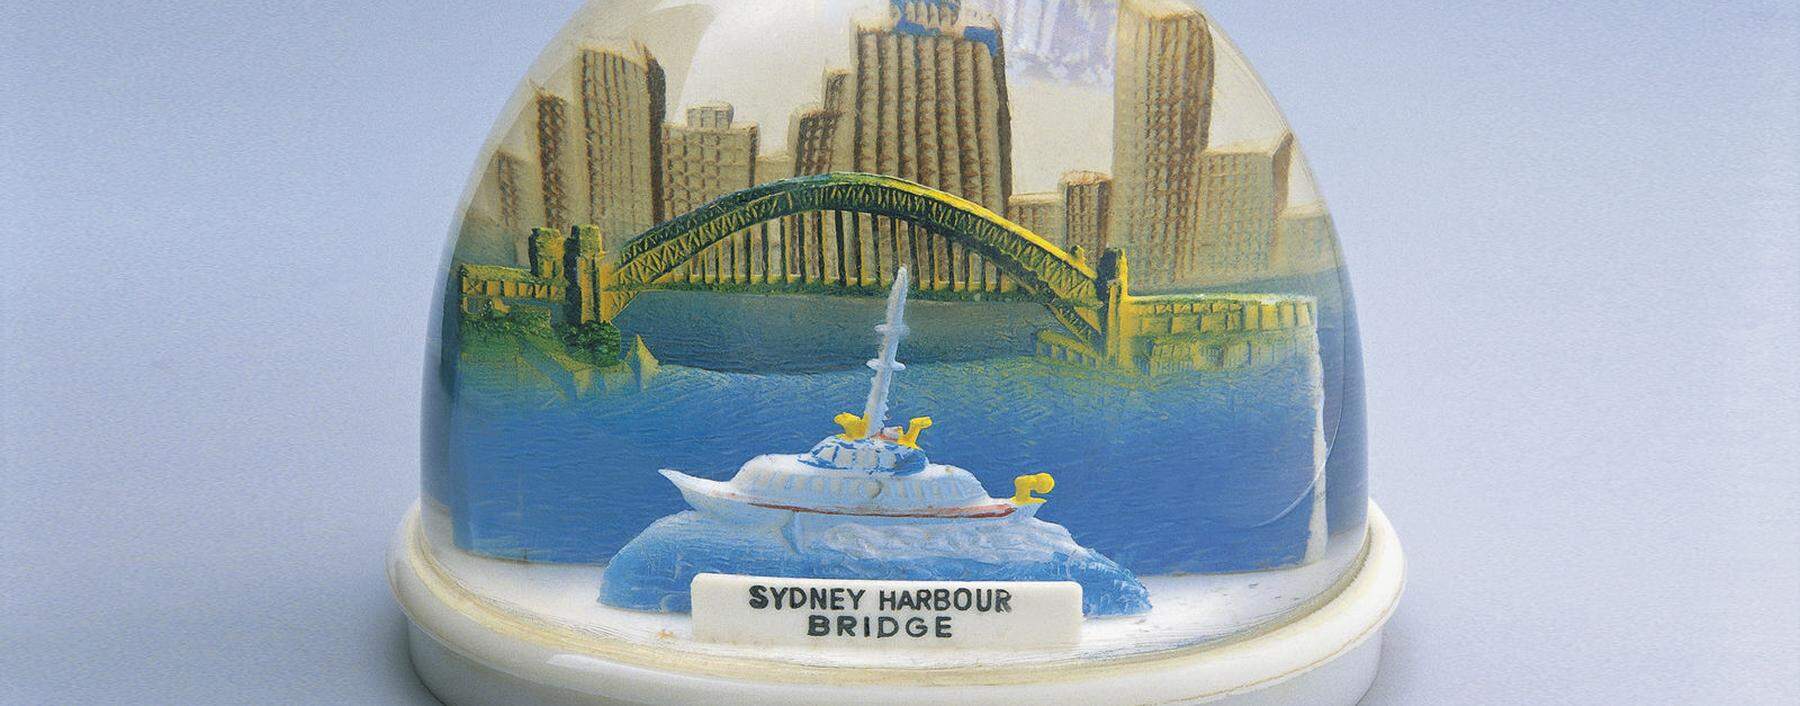 Close-up of a figurine of Sydney Harbor Bridge in a snow globe